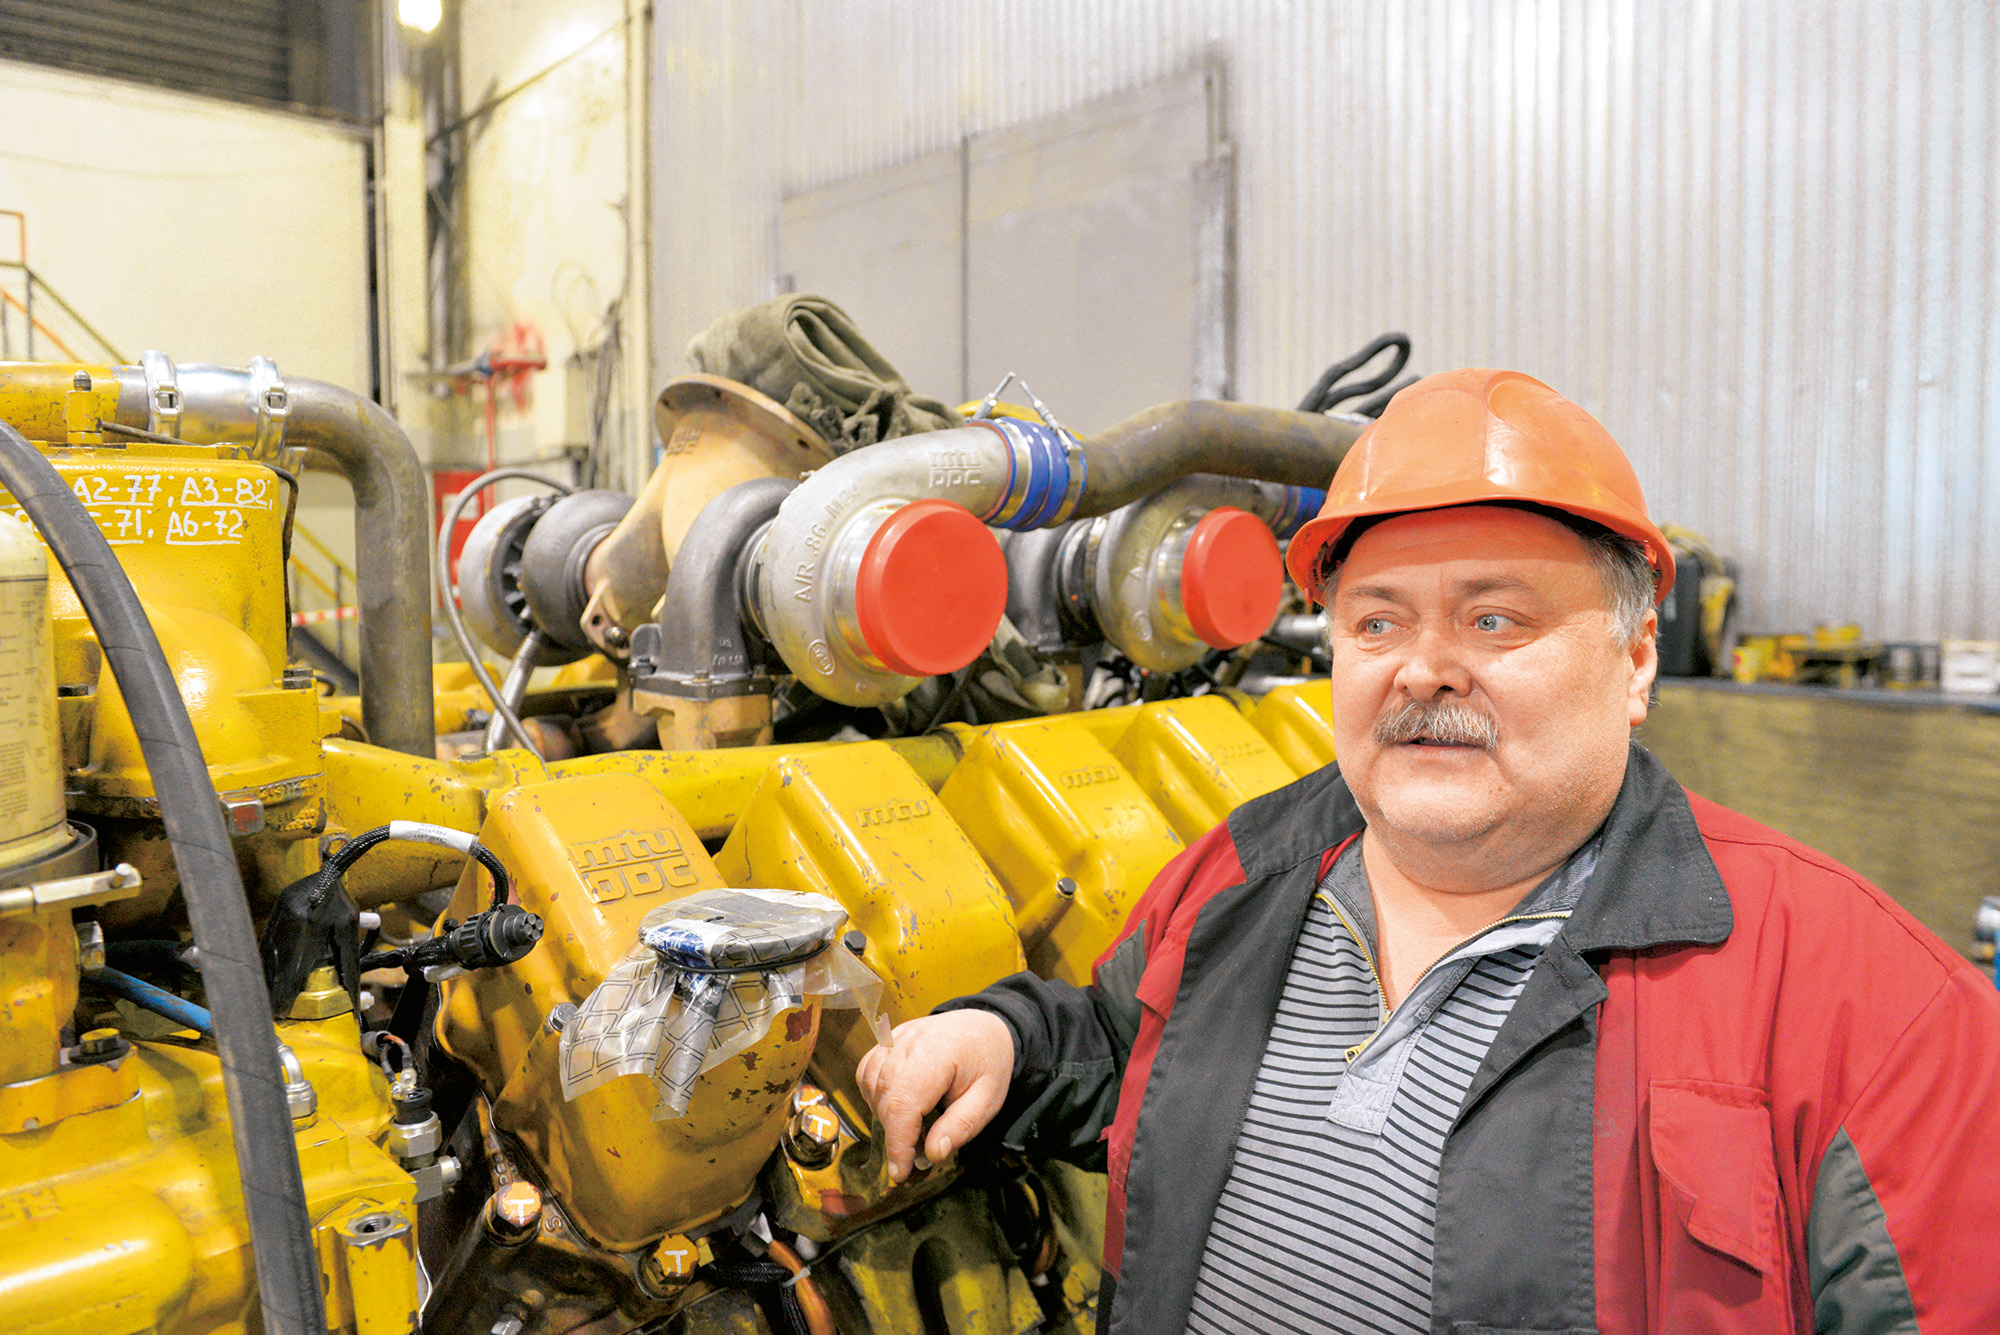  Wenjamin Metelski arbeitet seit 2005 als Mechaniker an den MTU-Motoren. Stolz erzählt er, dass der MTU-Motor an dem er lehnt schon weit mehr als 60.000 Betriebsstunden gelaufen ist.